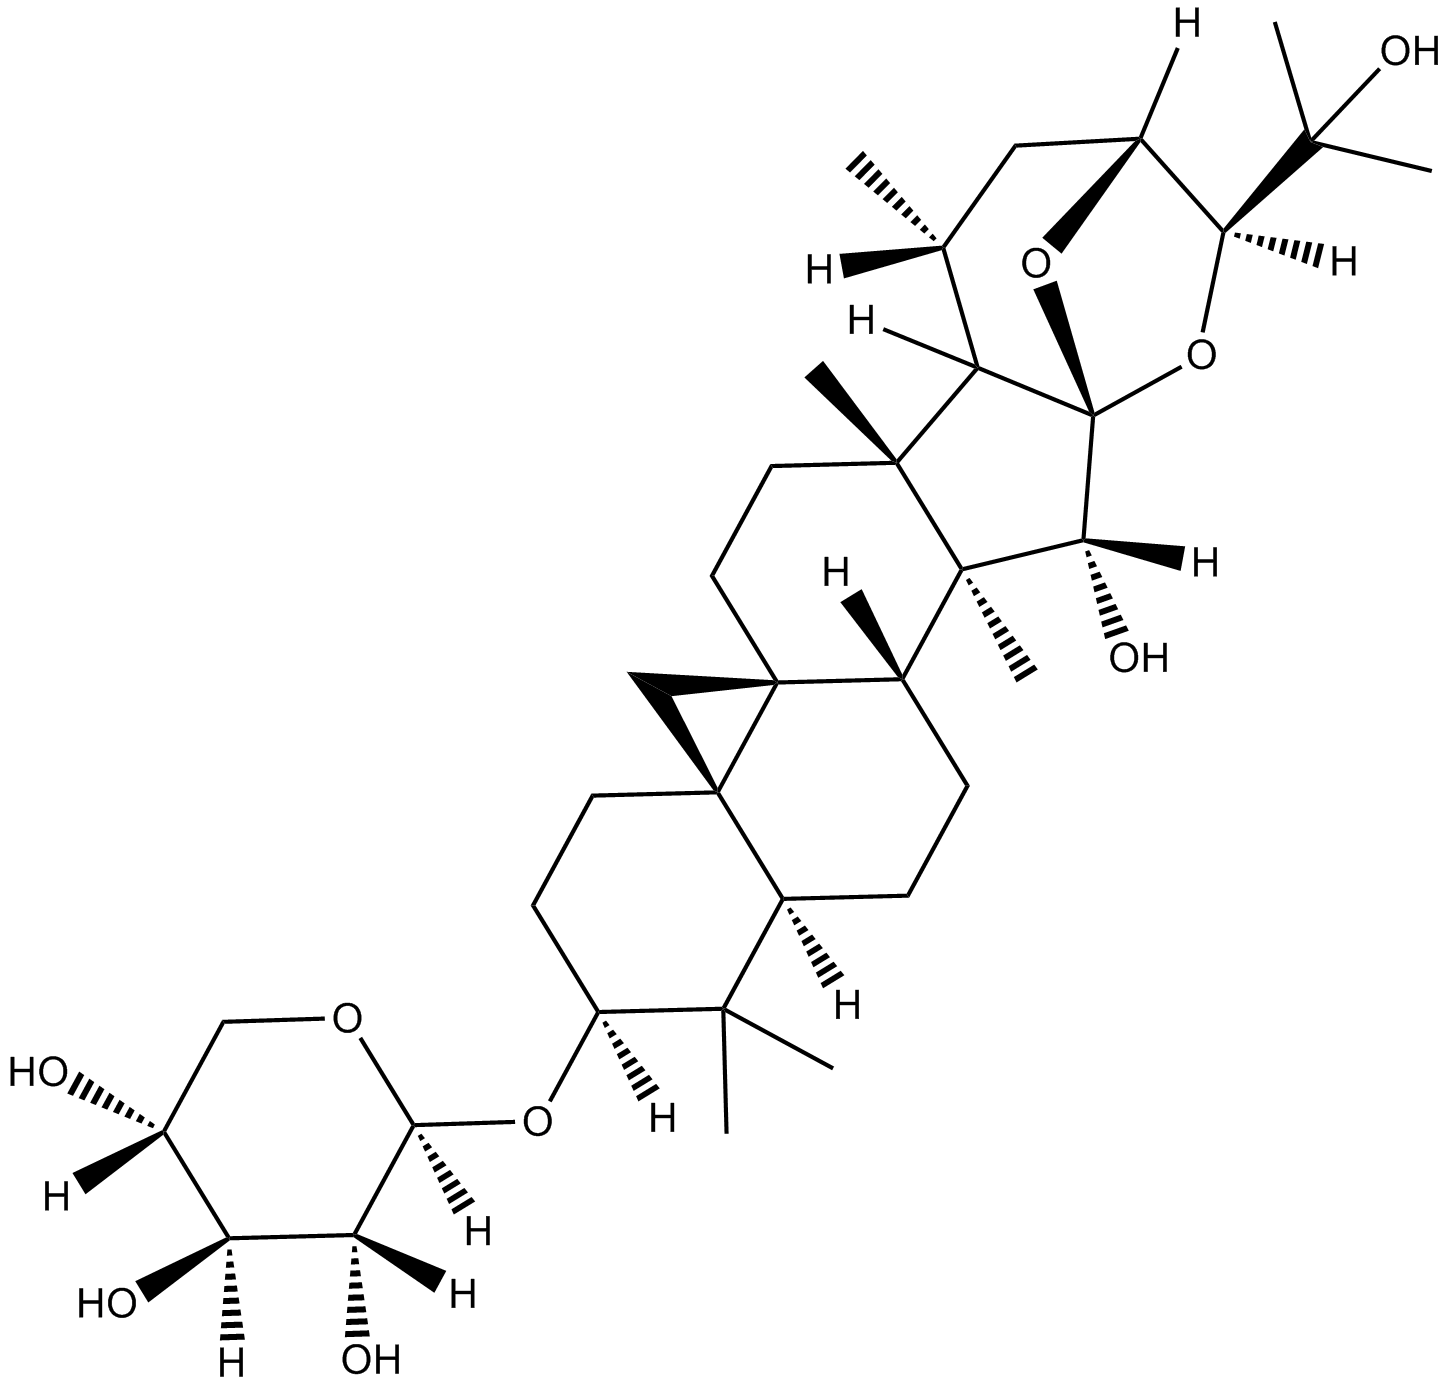 CiMigenol 3-β-D-xylopyranoside